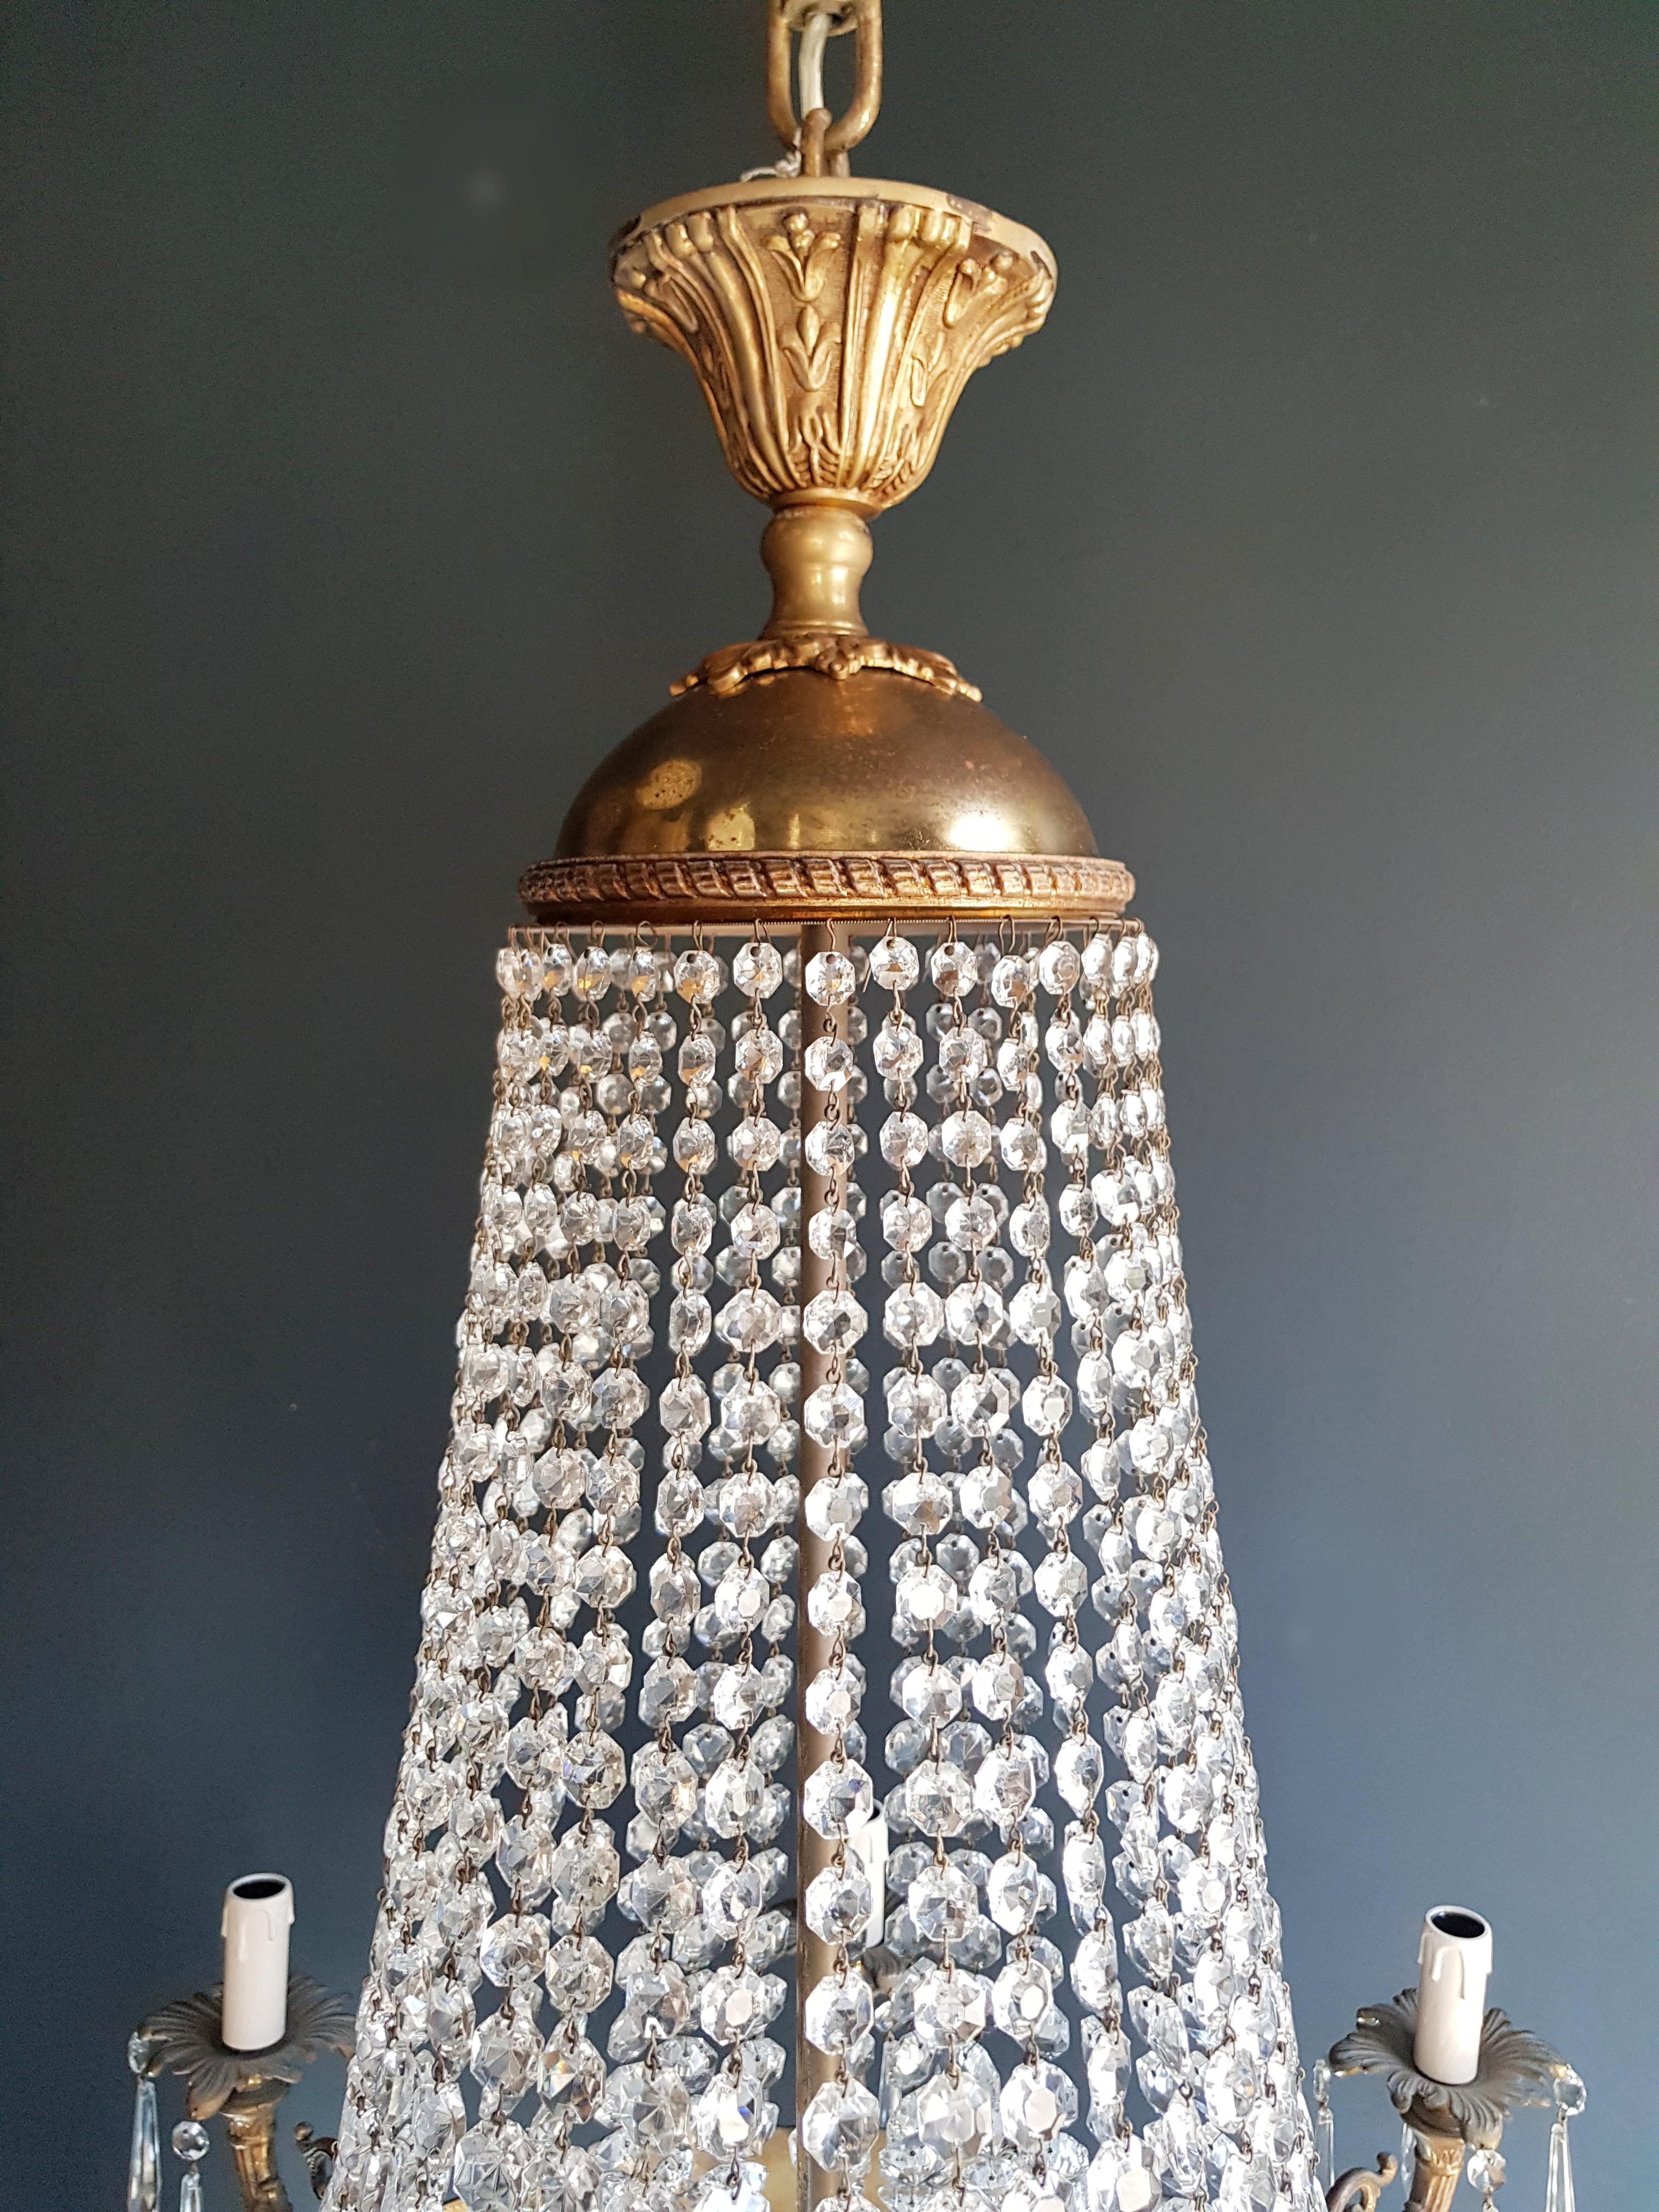 Montgolfiè Empire Sac a Pearl Chandelier Crystal Lustre Ceiling Lamp Antique (Frühes 20. Jahrhundert)